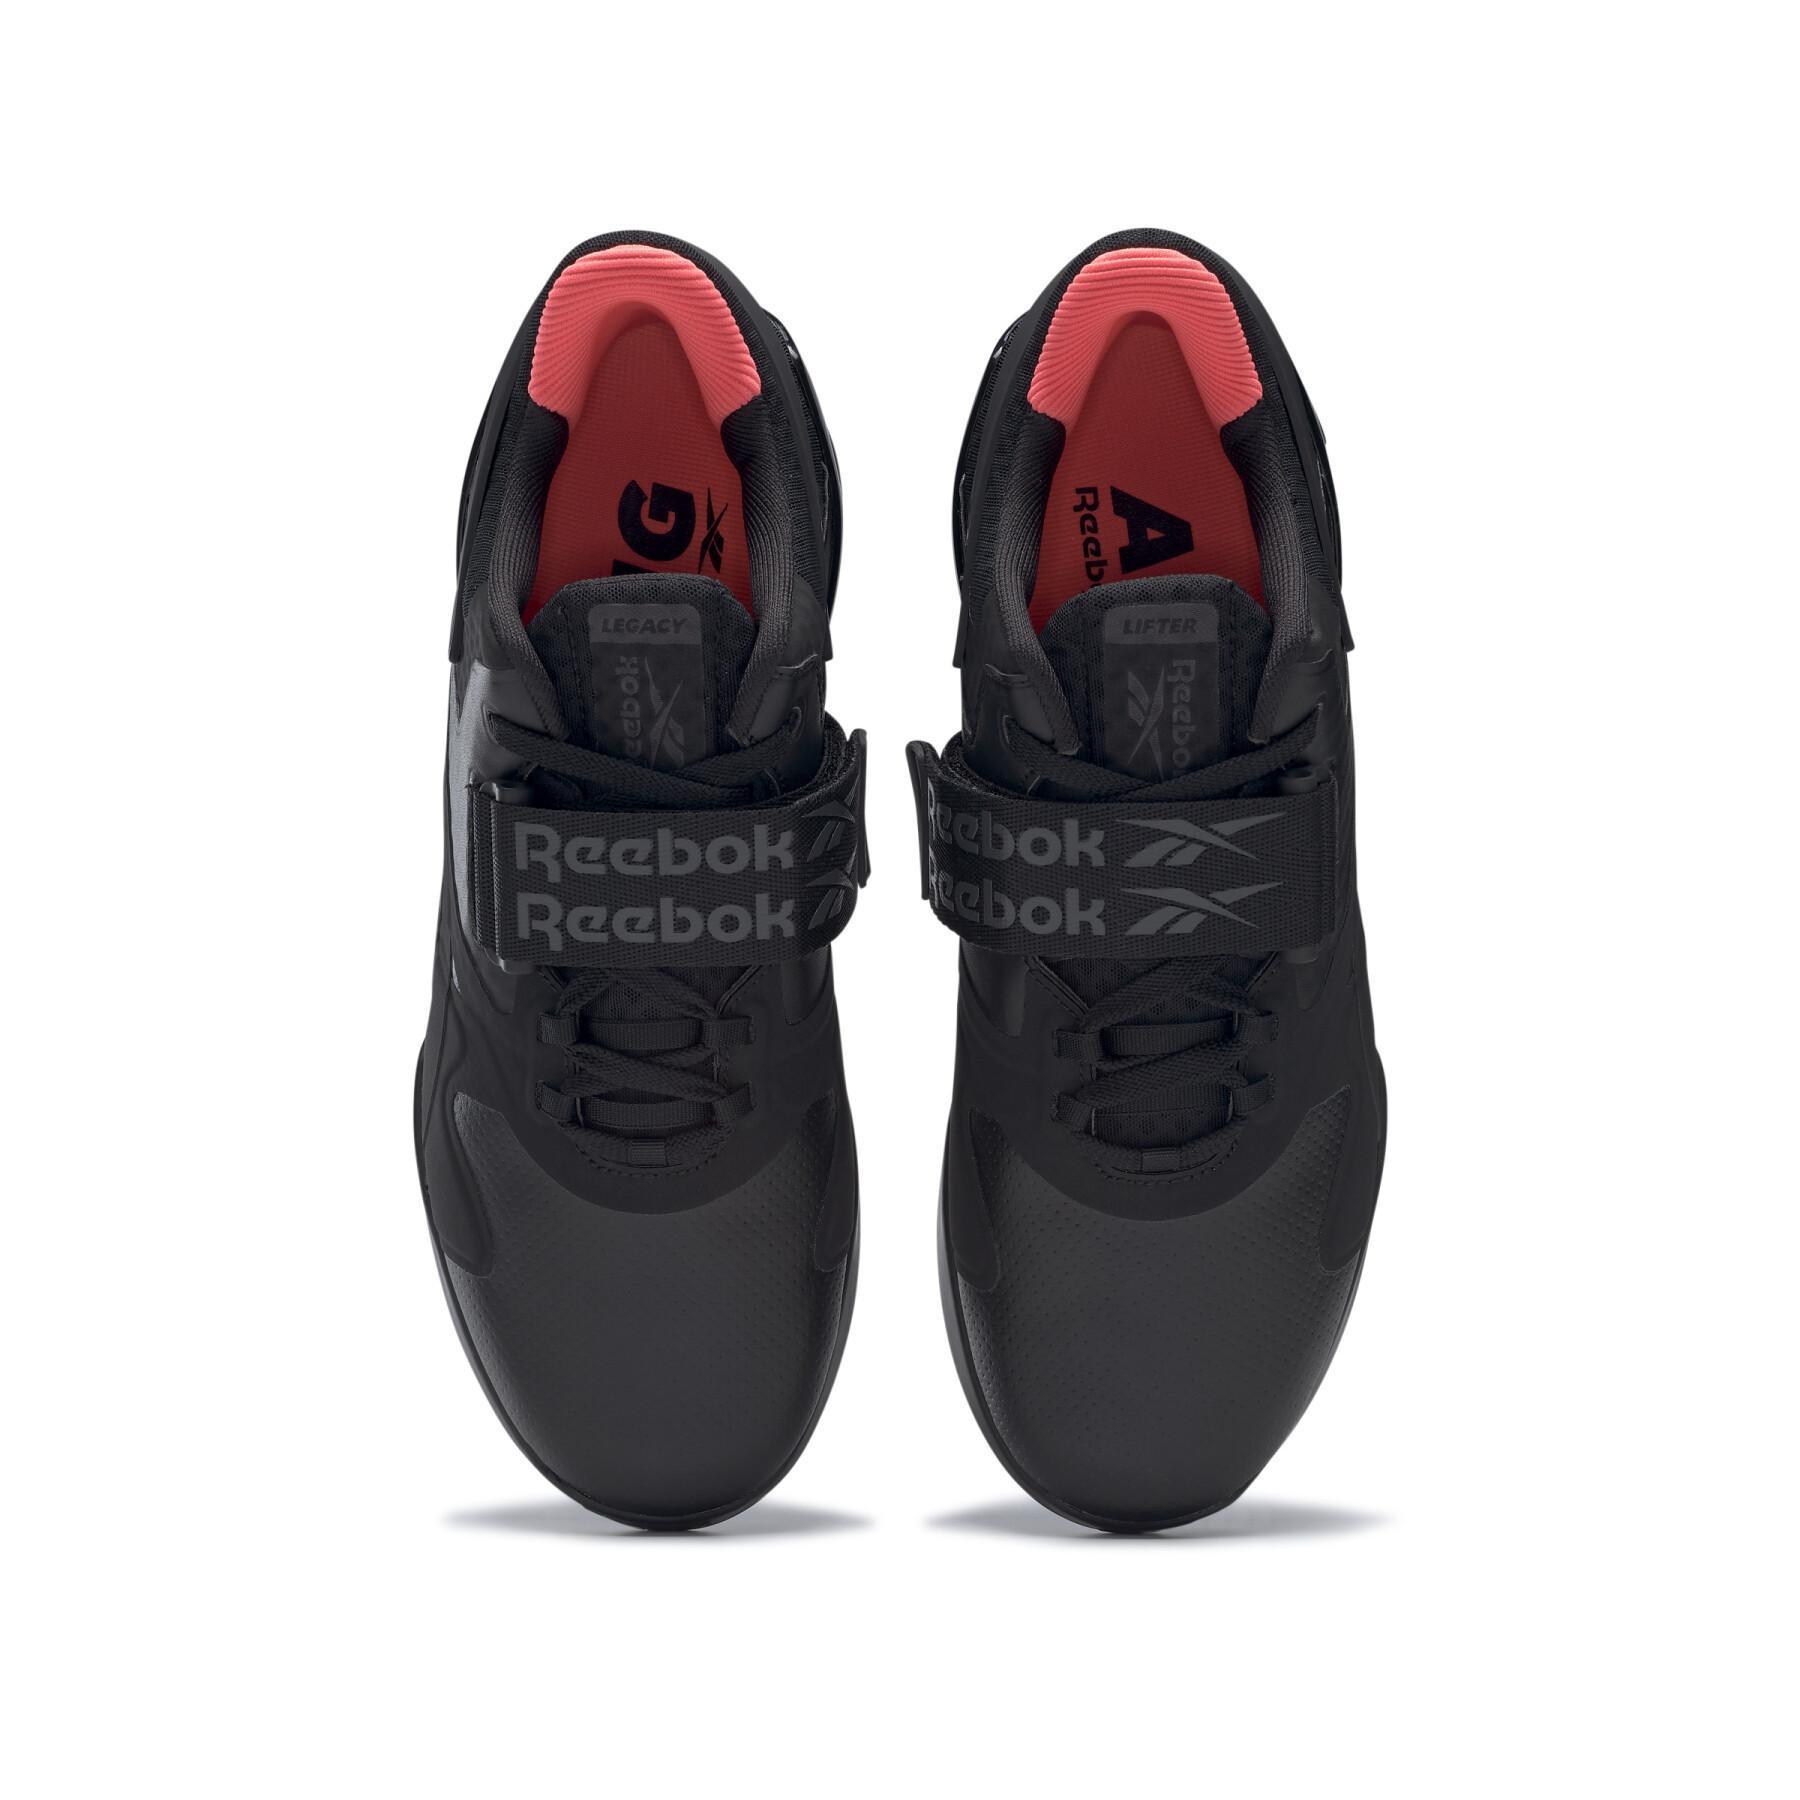 Shoes Reebok Legacy Lifter II